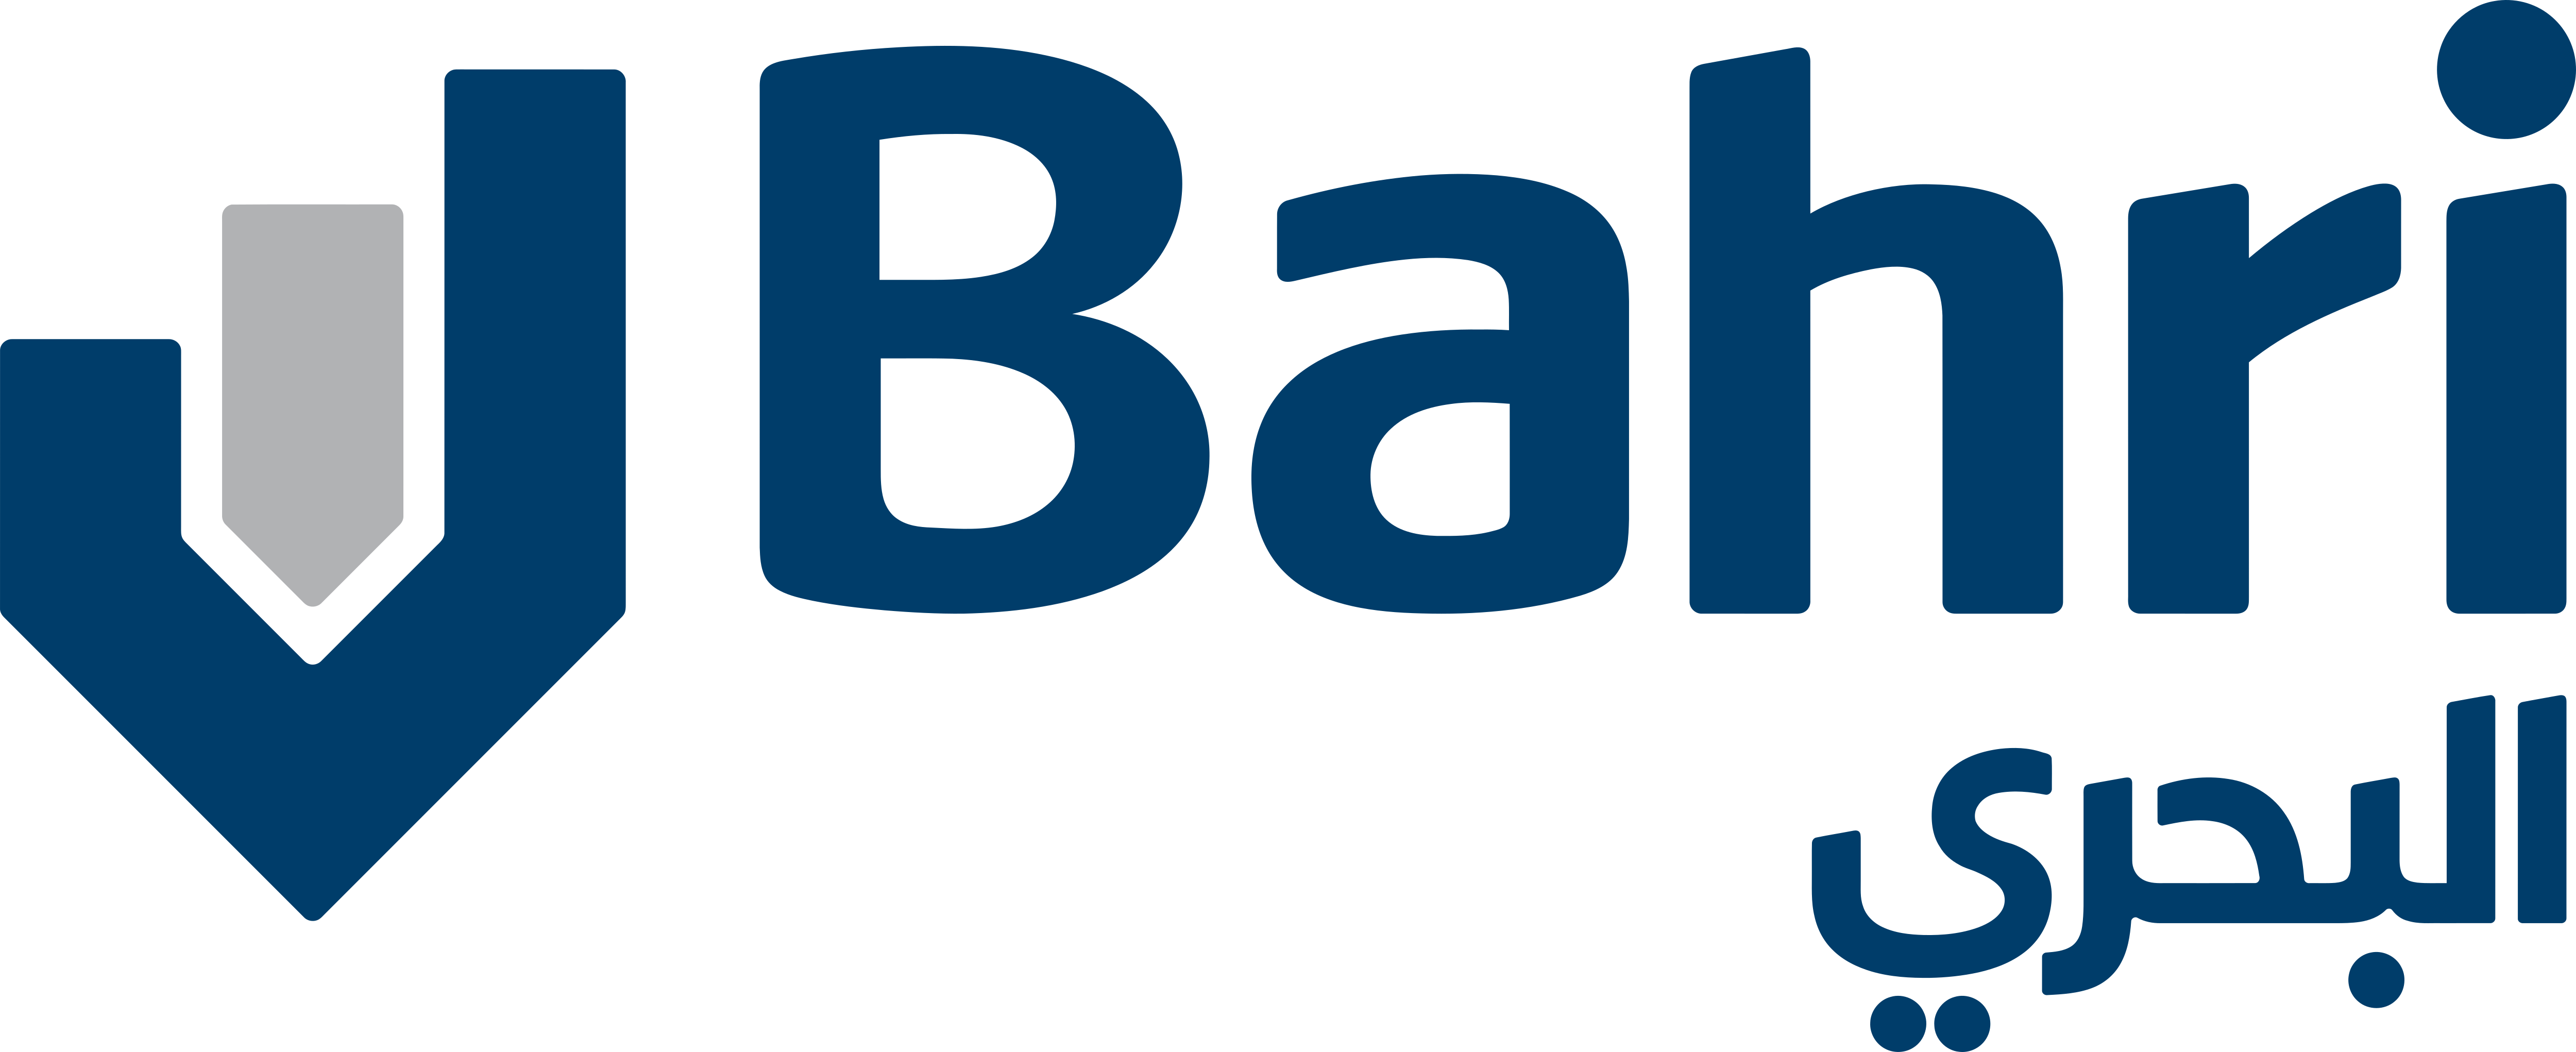 Bahri Sa Logos Download